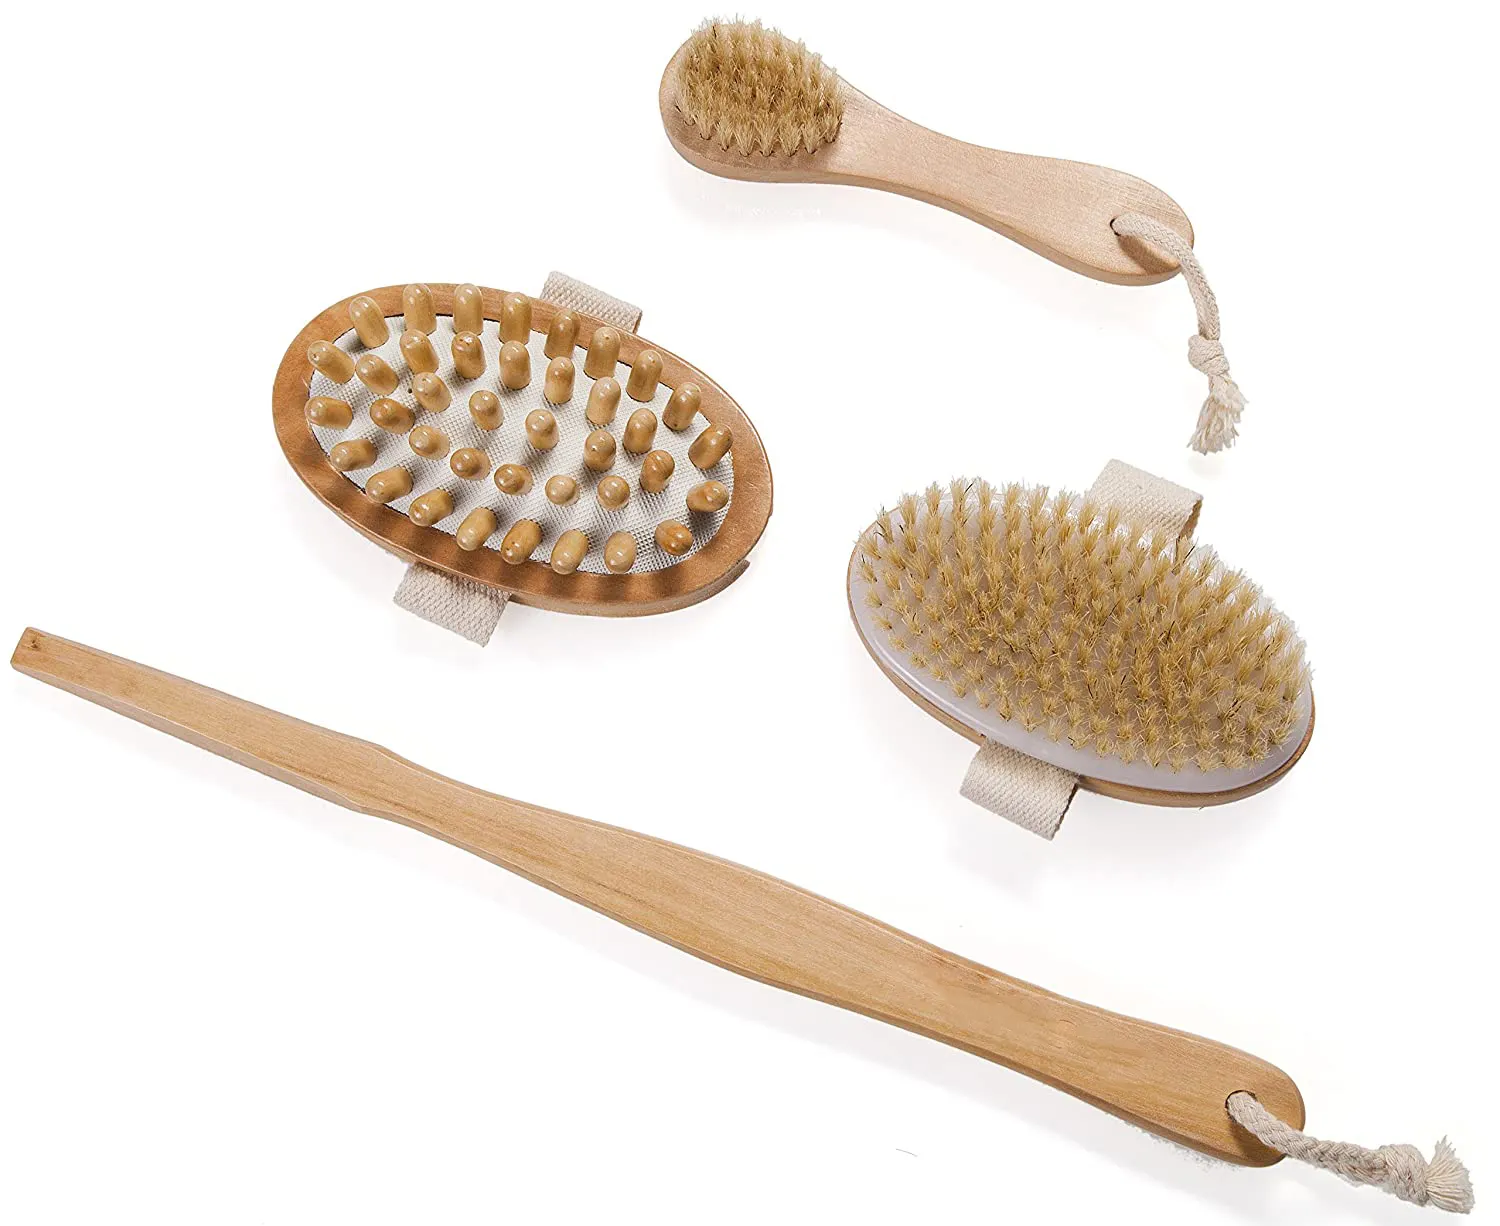 Conjunto de escova de madeira dupla face, kit de escova para limpeza de cerdas naturais com cabo longo